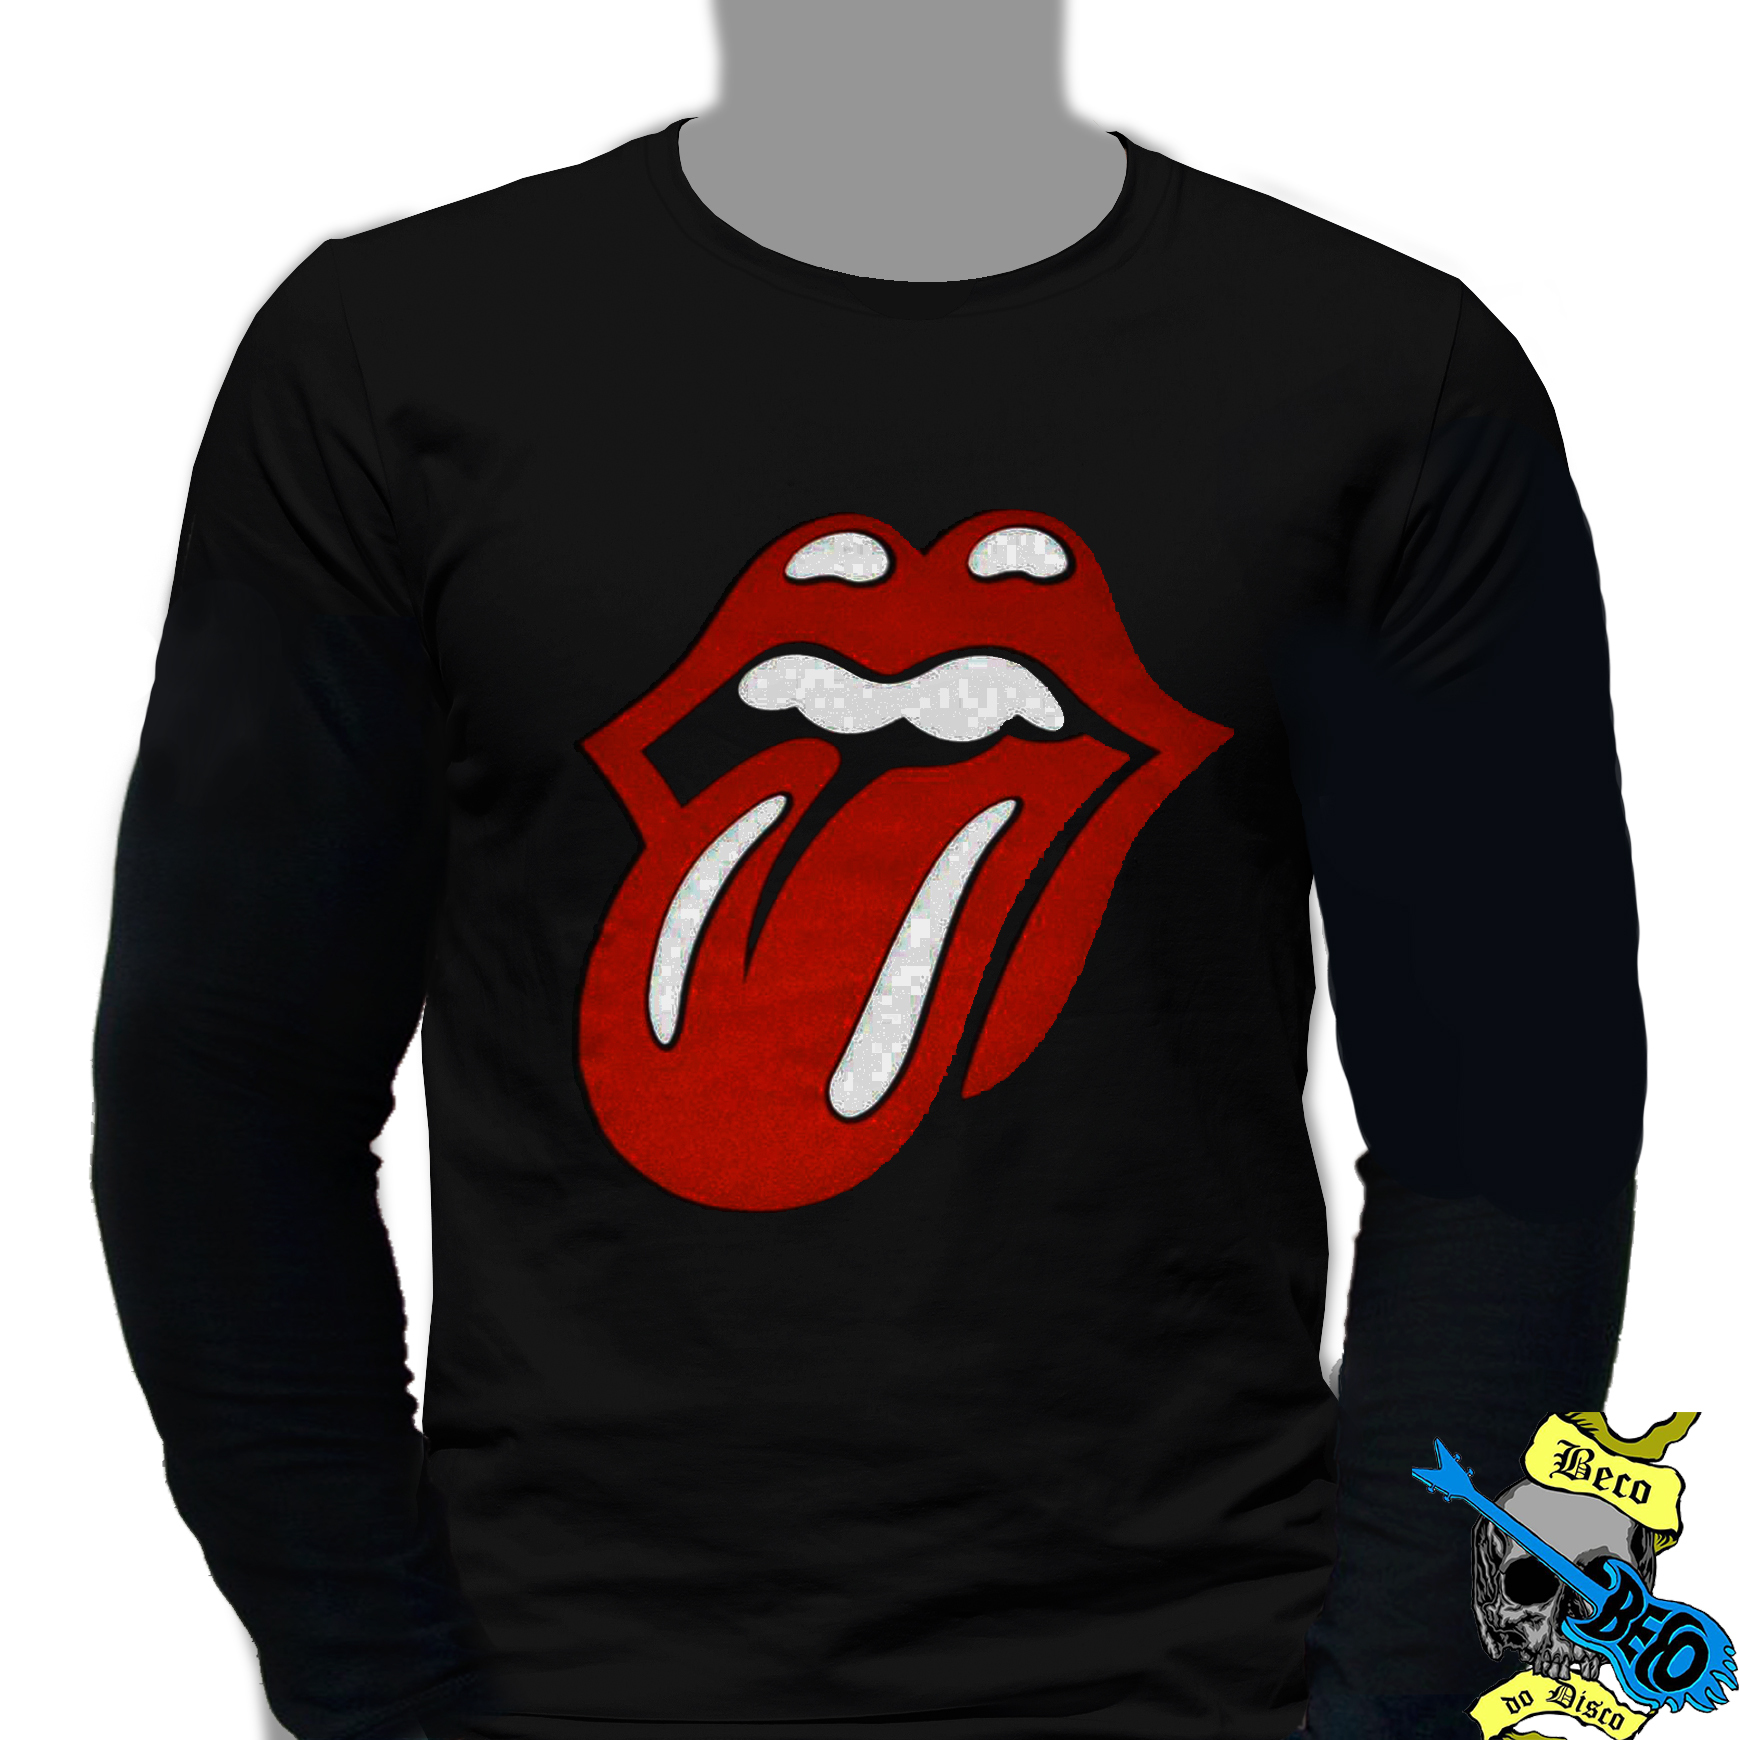 Camiseta Manga Longa - Rolling Stones - BNL180